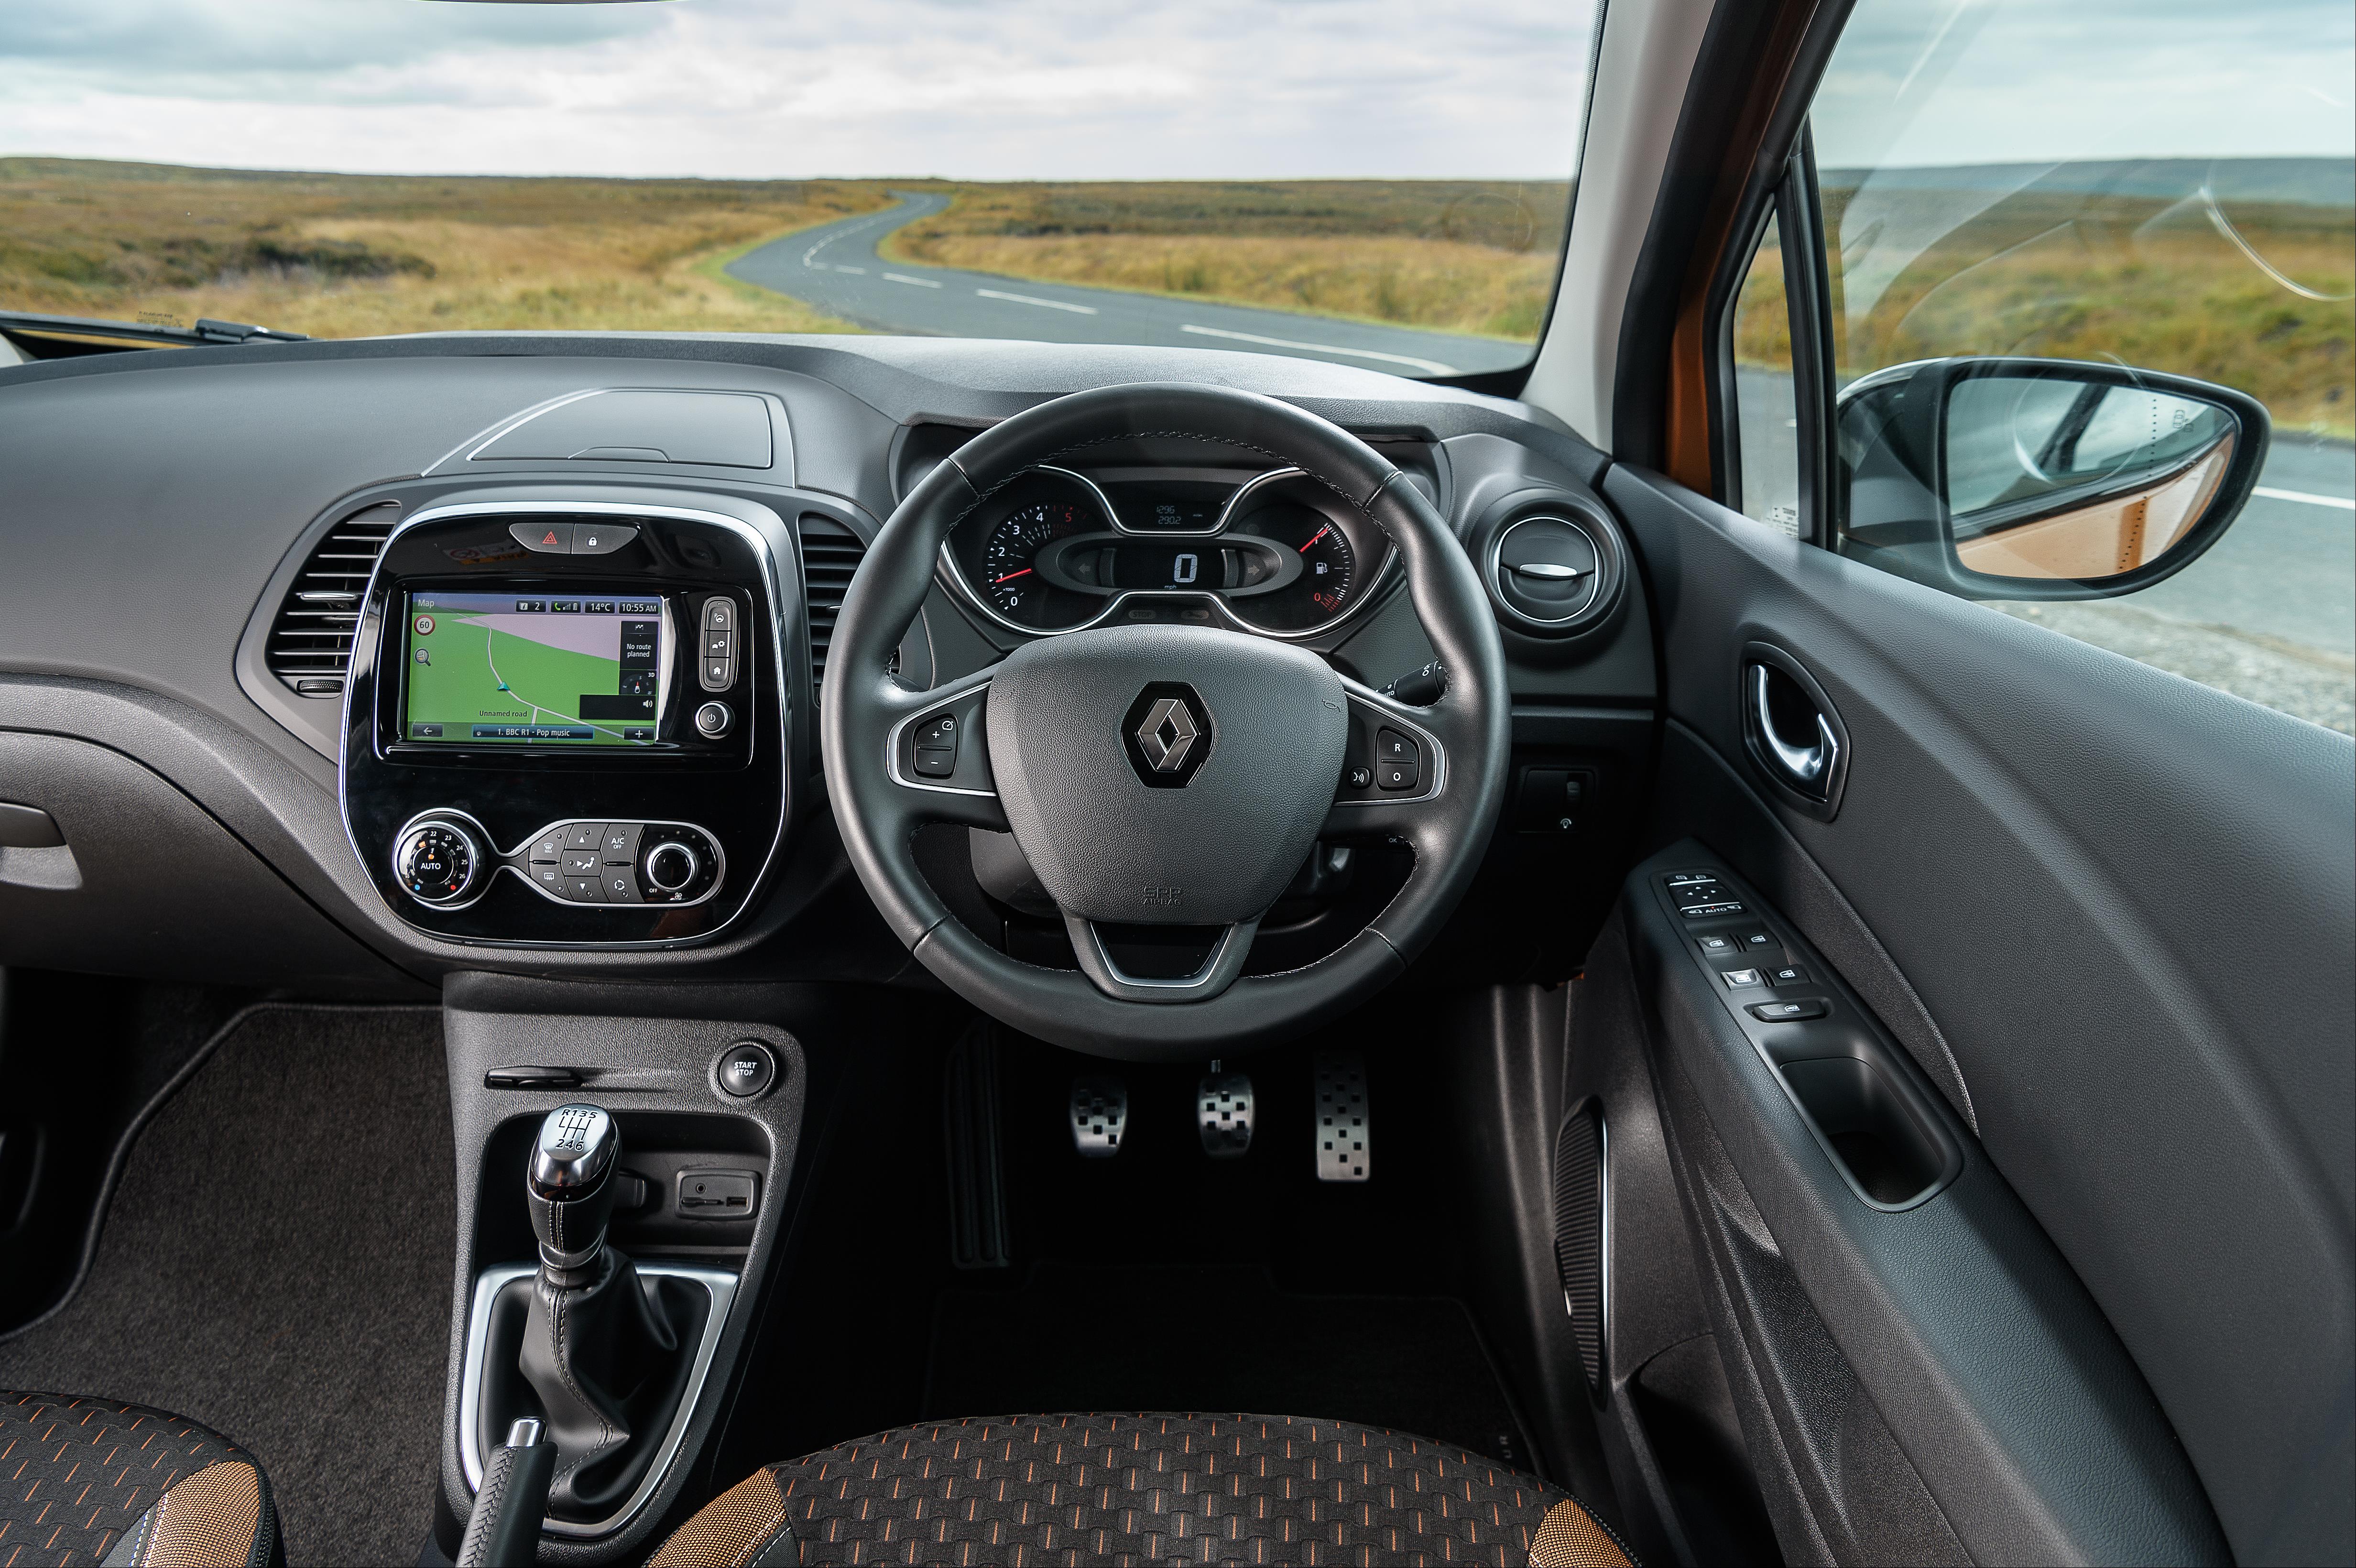 New Renault Captur (2013-2017) Review